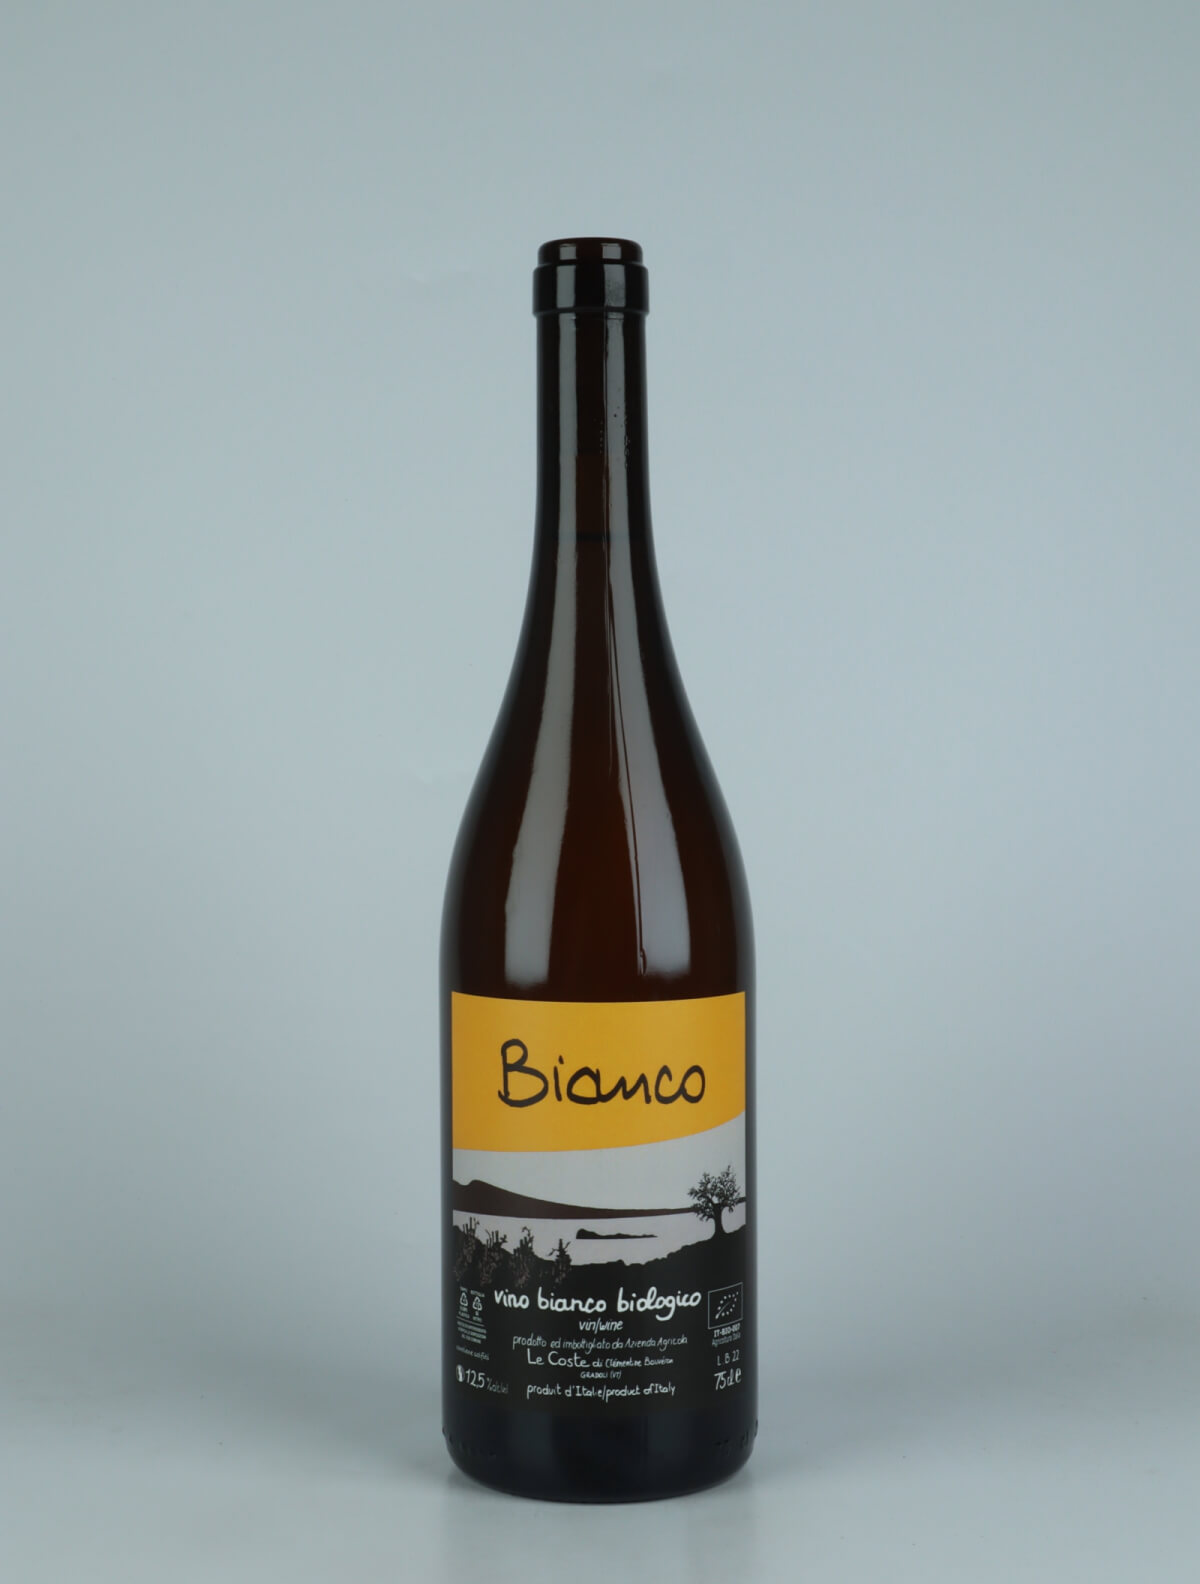 A bottle 2022 Bianco Orange wine from Le Coste, Lazio in Italy